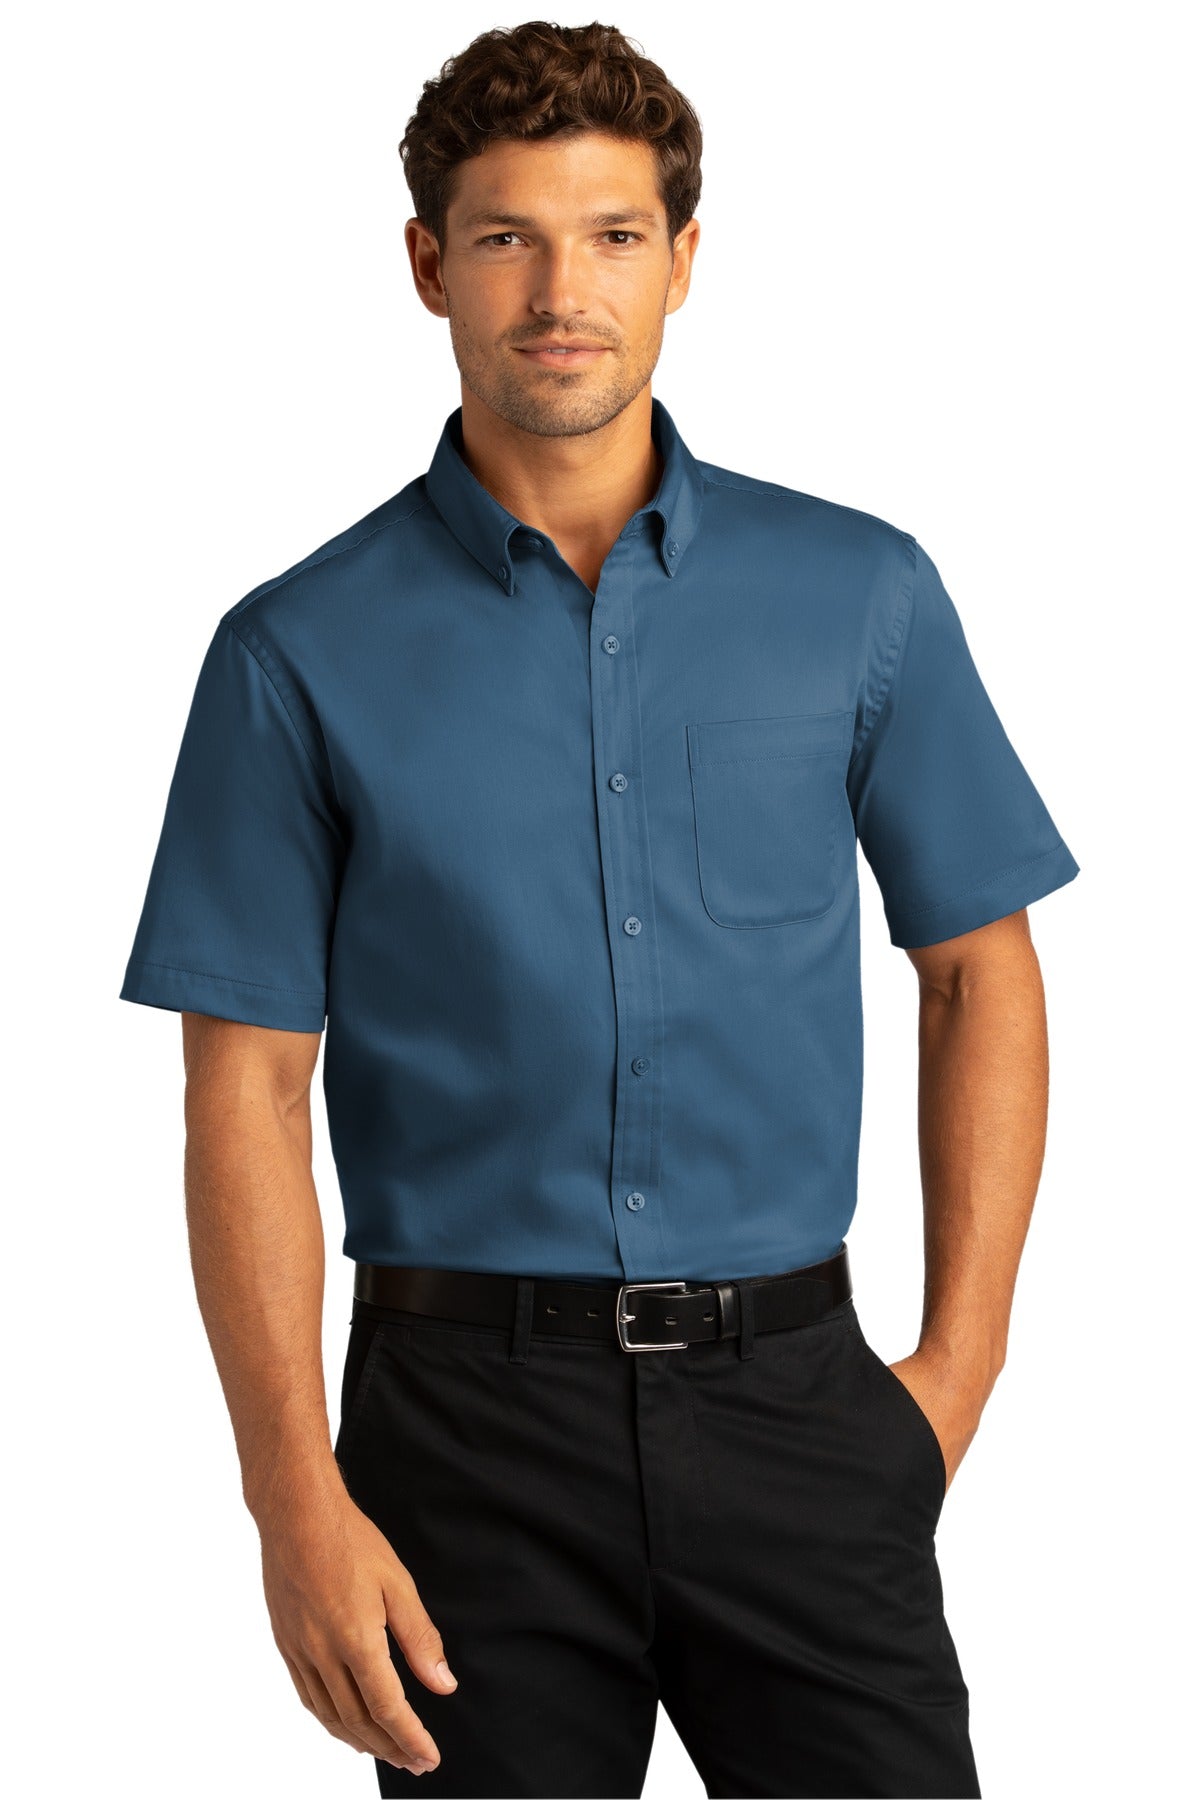 Port Authority® Short Sleeve SuperPro React™ Twill Shirt. W809 [Regatta Blue] - DFW Impression